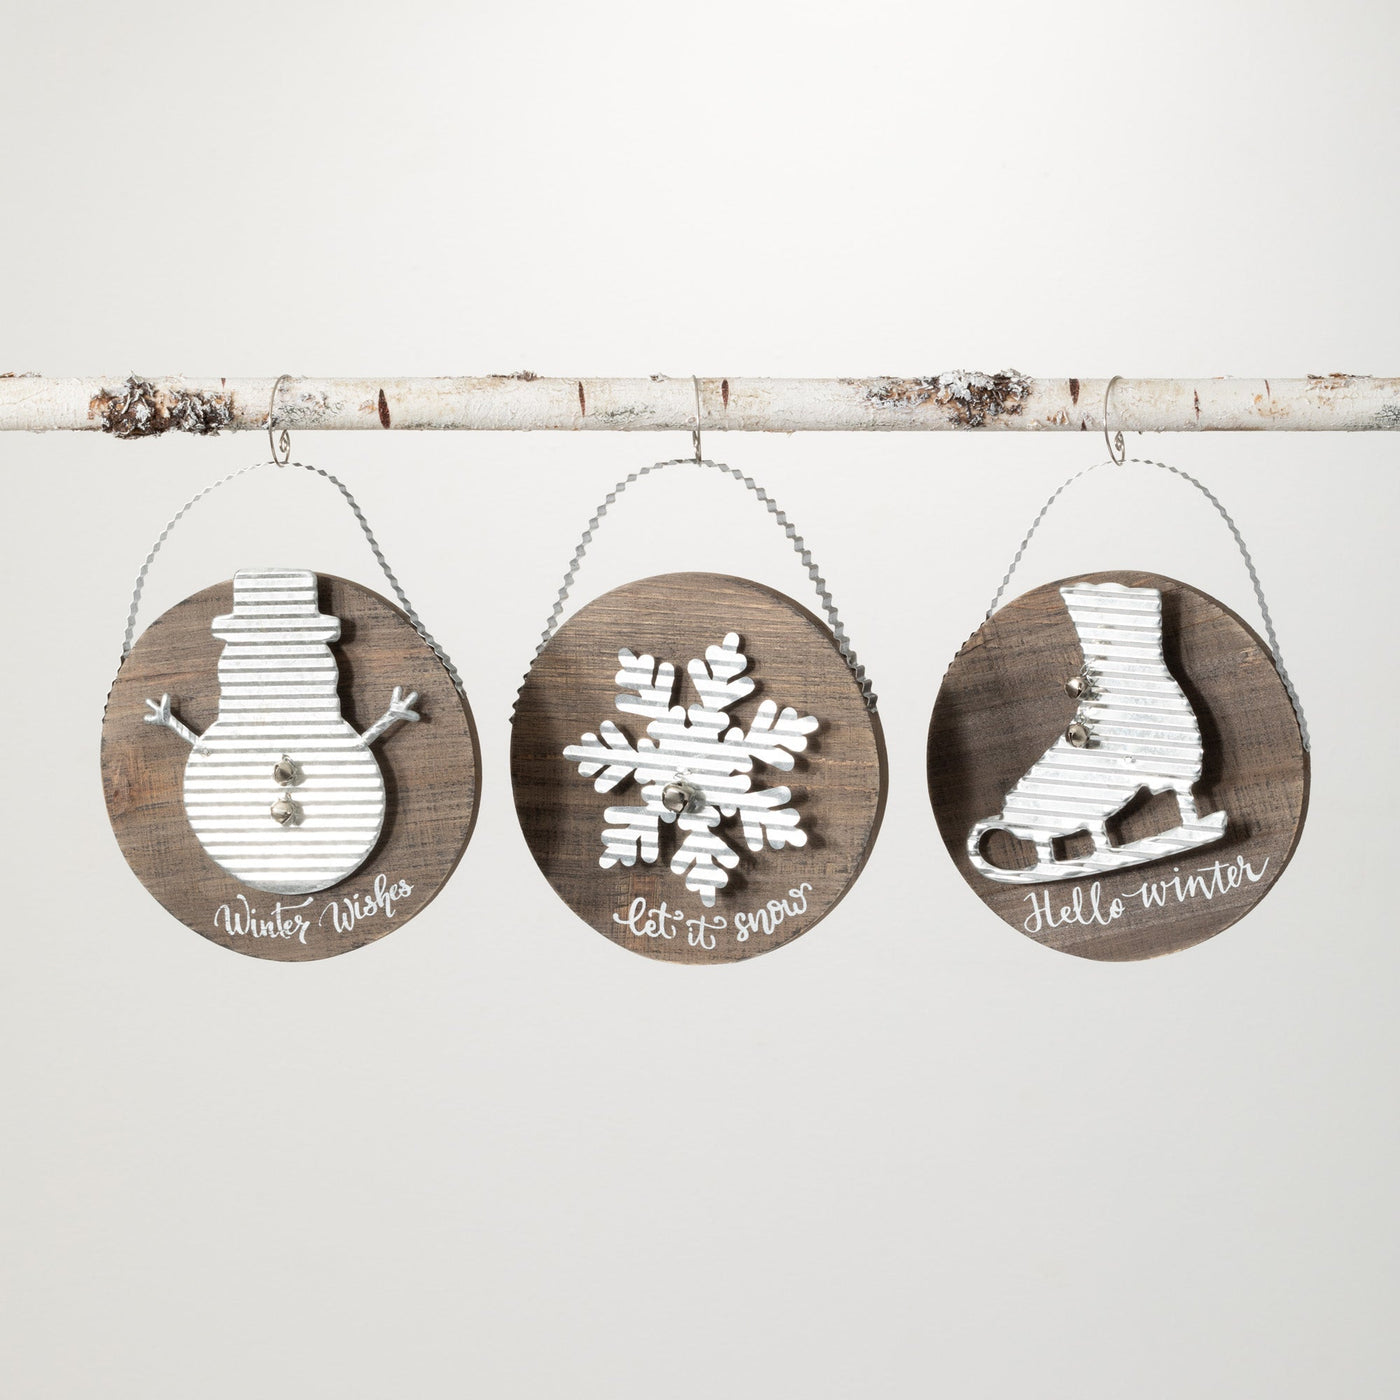 Rustic Wood & Galvanized Metal Ornaments
